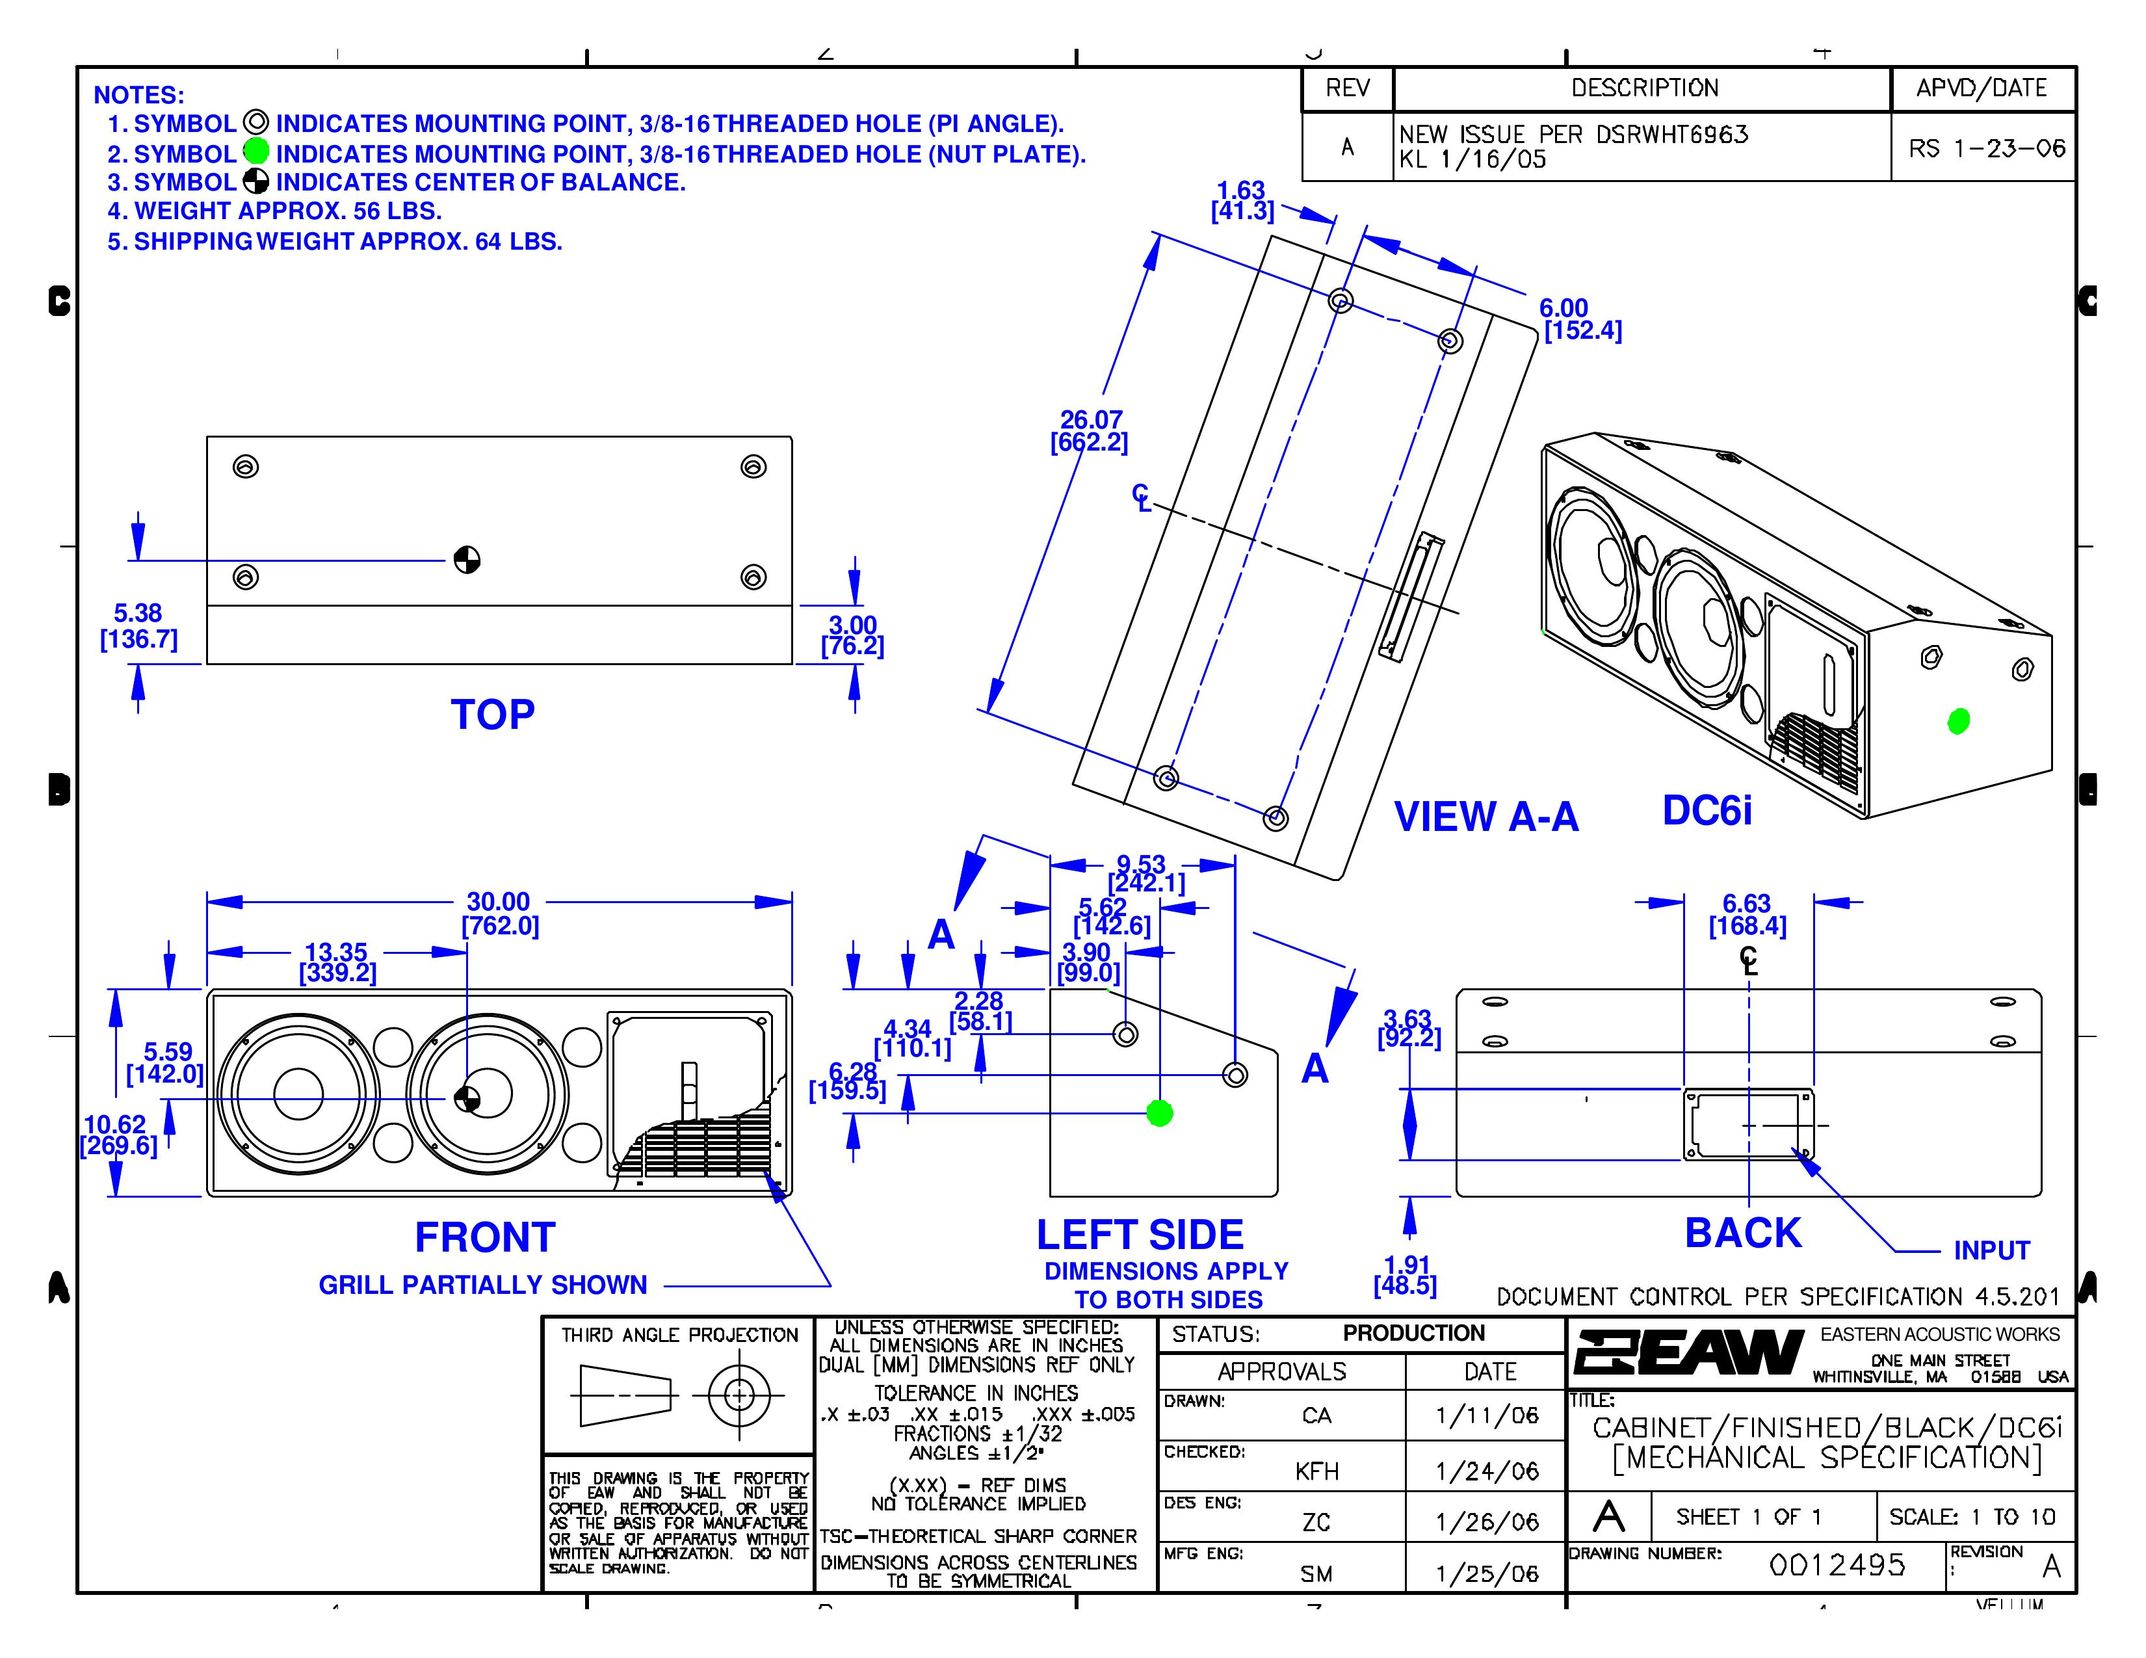 EAW DC6i 2D Speaker User Manual